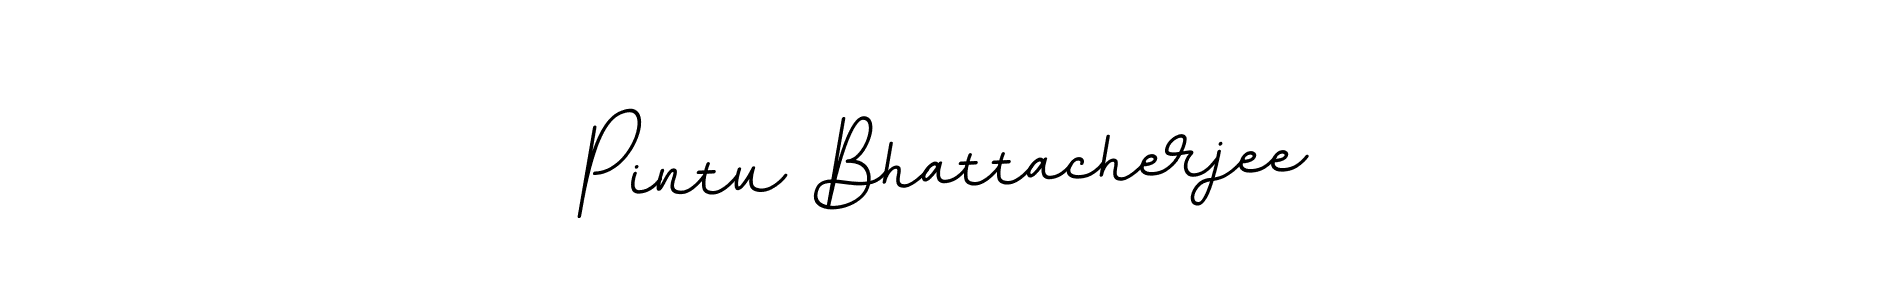 How to Draw Pintu Bhattacherjee signature style? BallpointsItalic-DORy9 is a latest design signature styles for name Pintu Bhattacherjee. Pintu Bhattacherjee signature style 11 images and pictures png